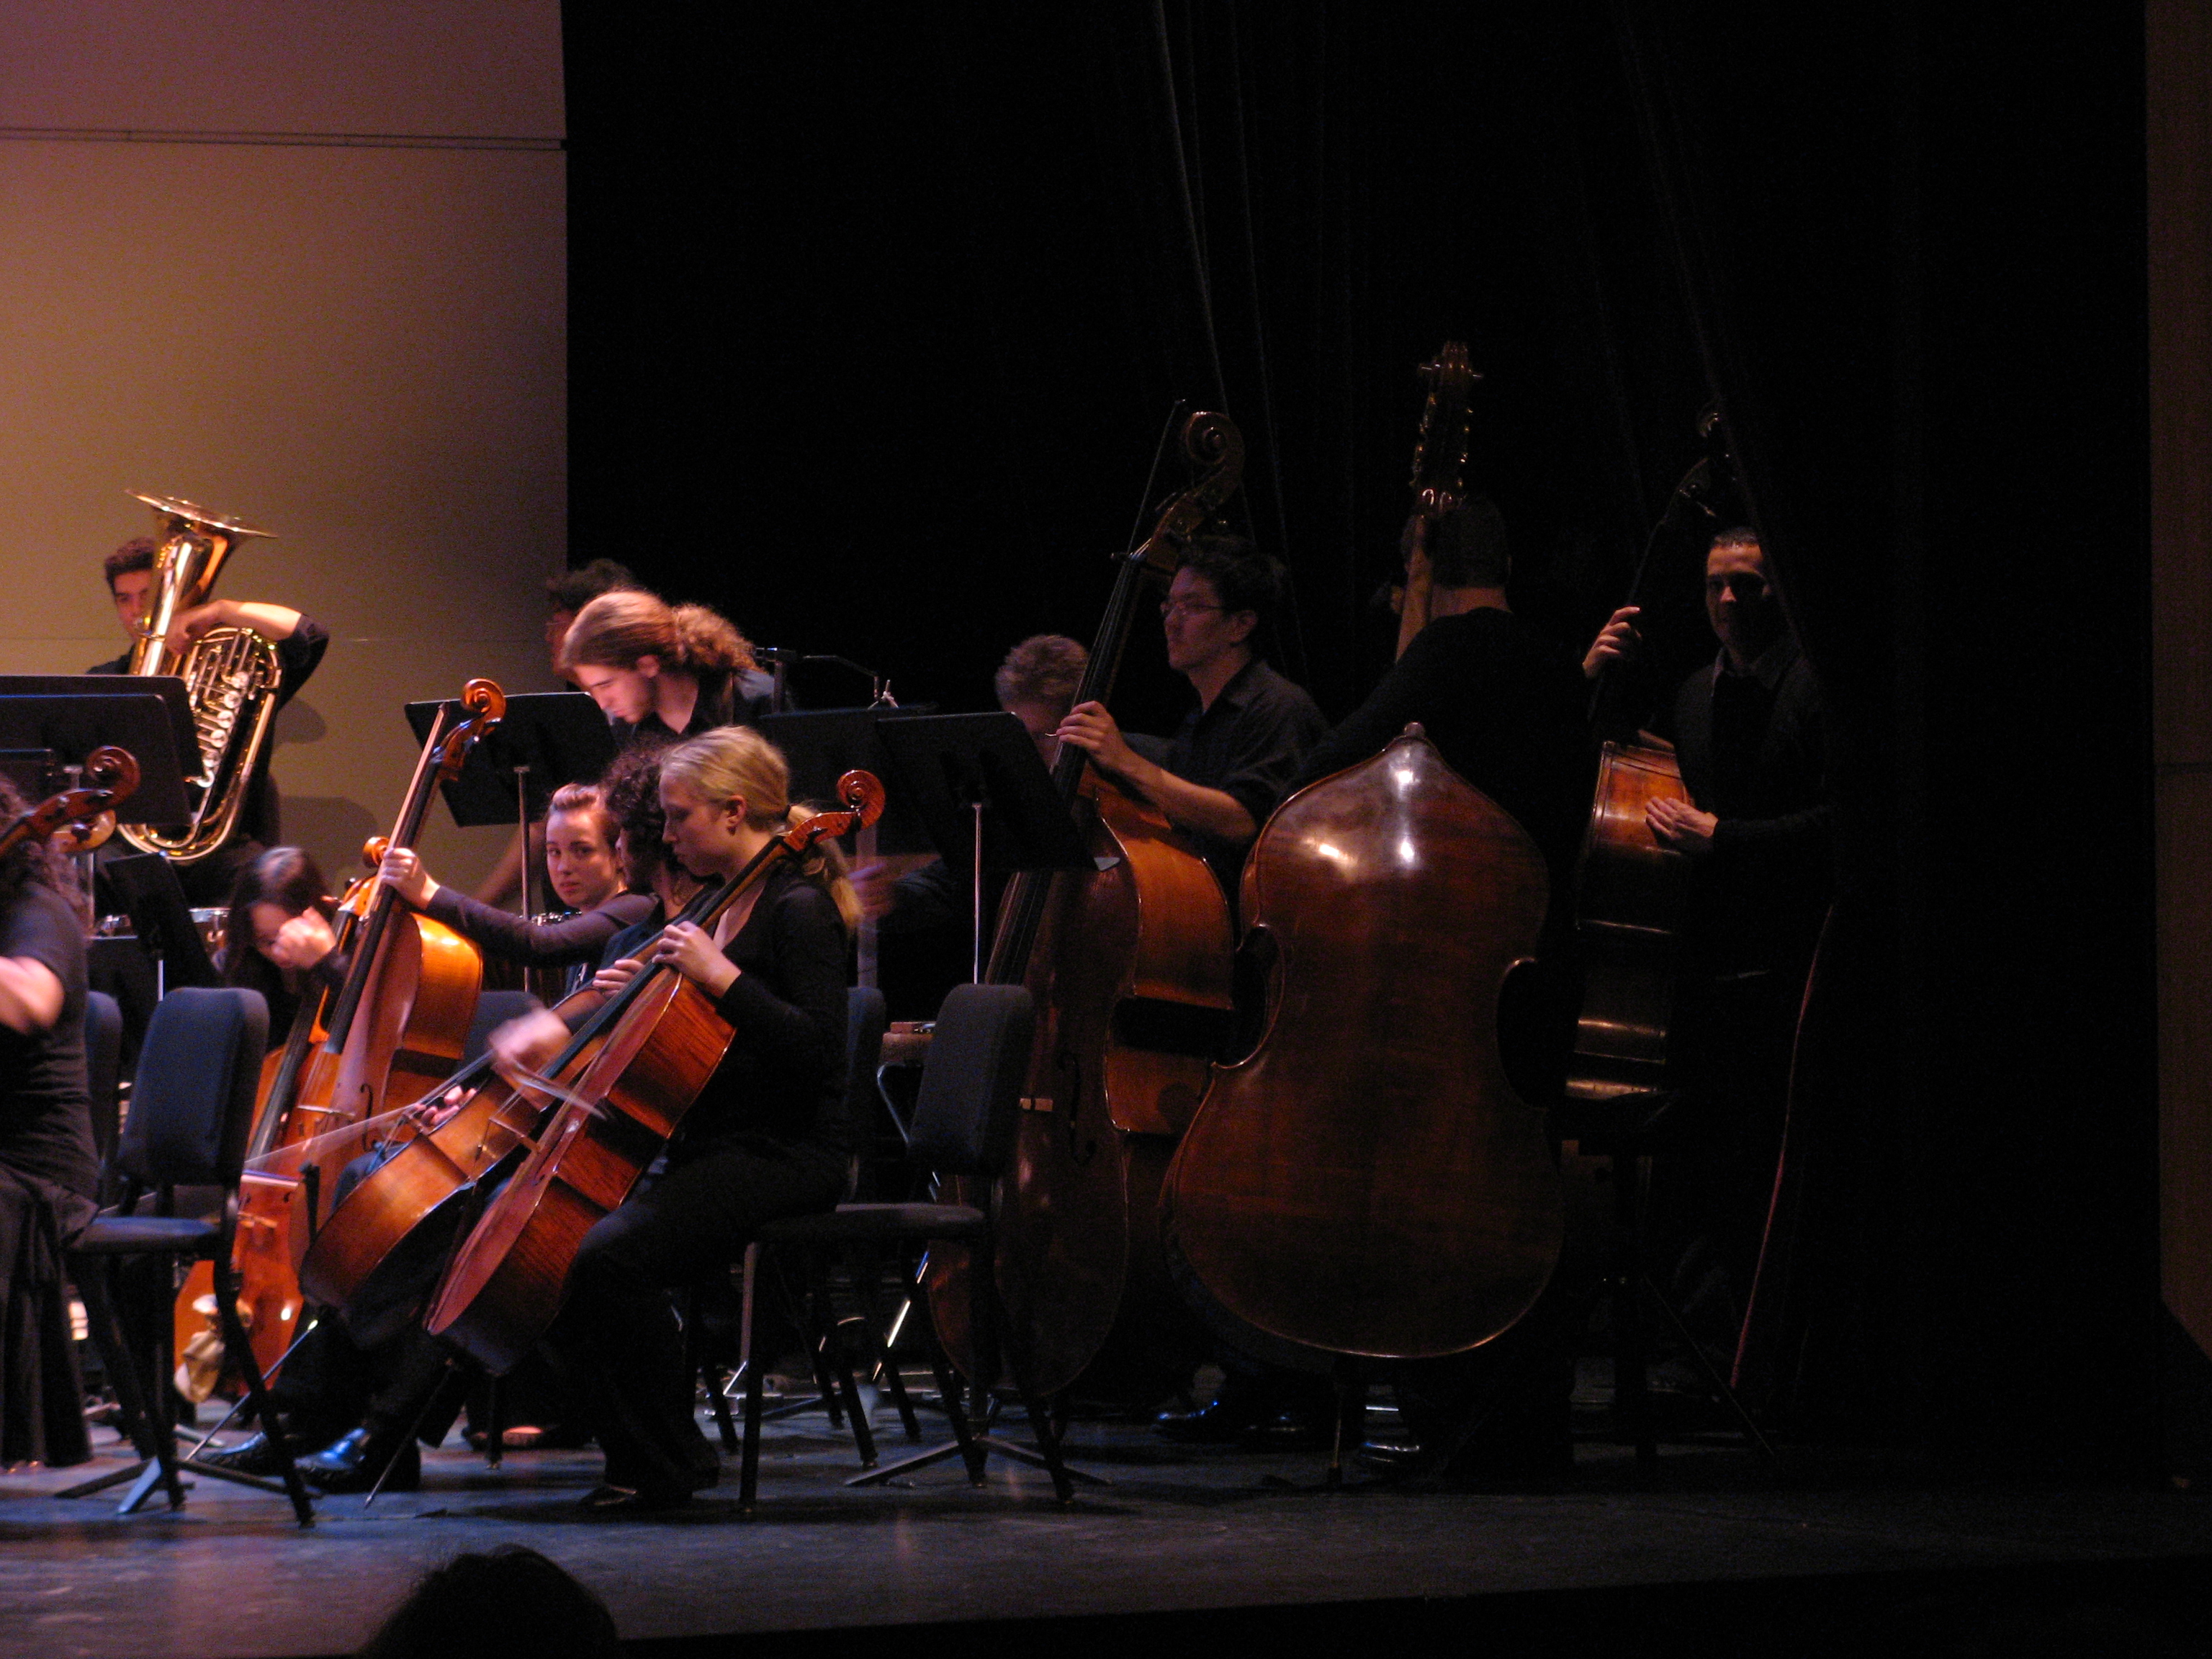 Back cellos during break